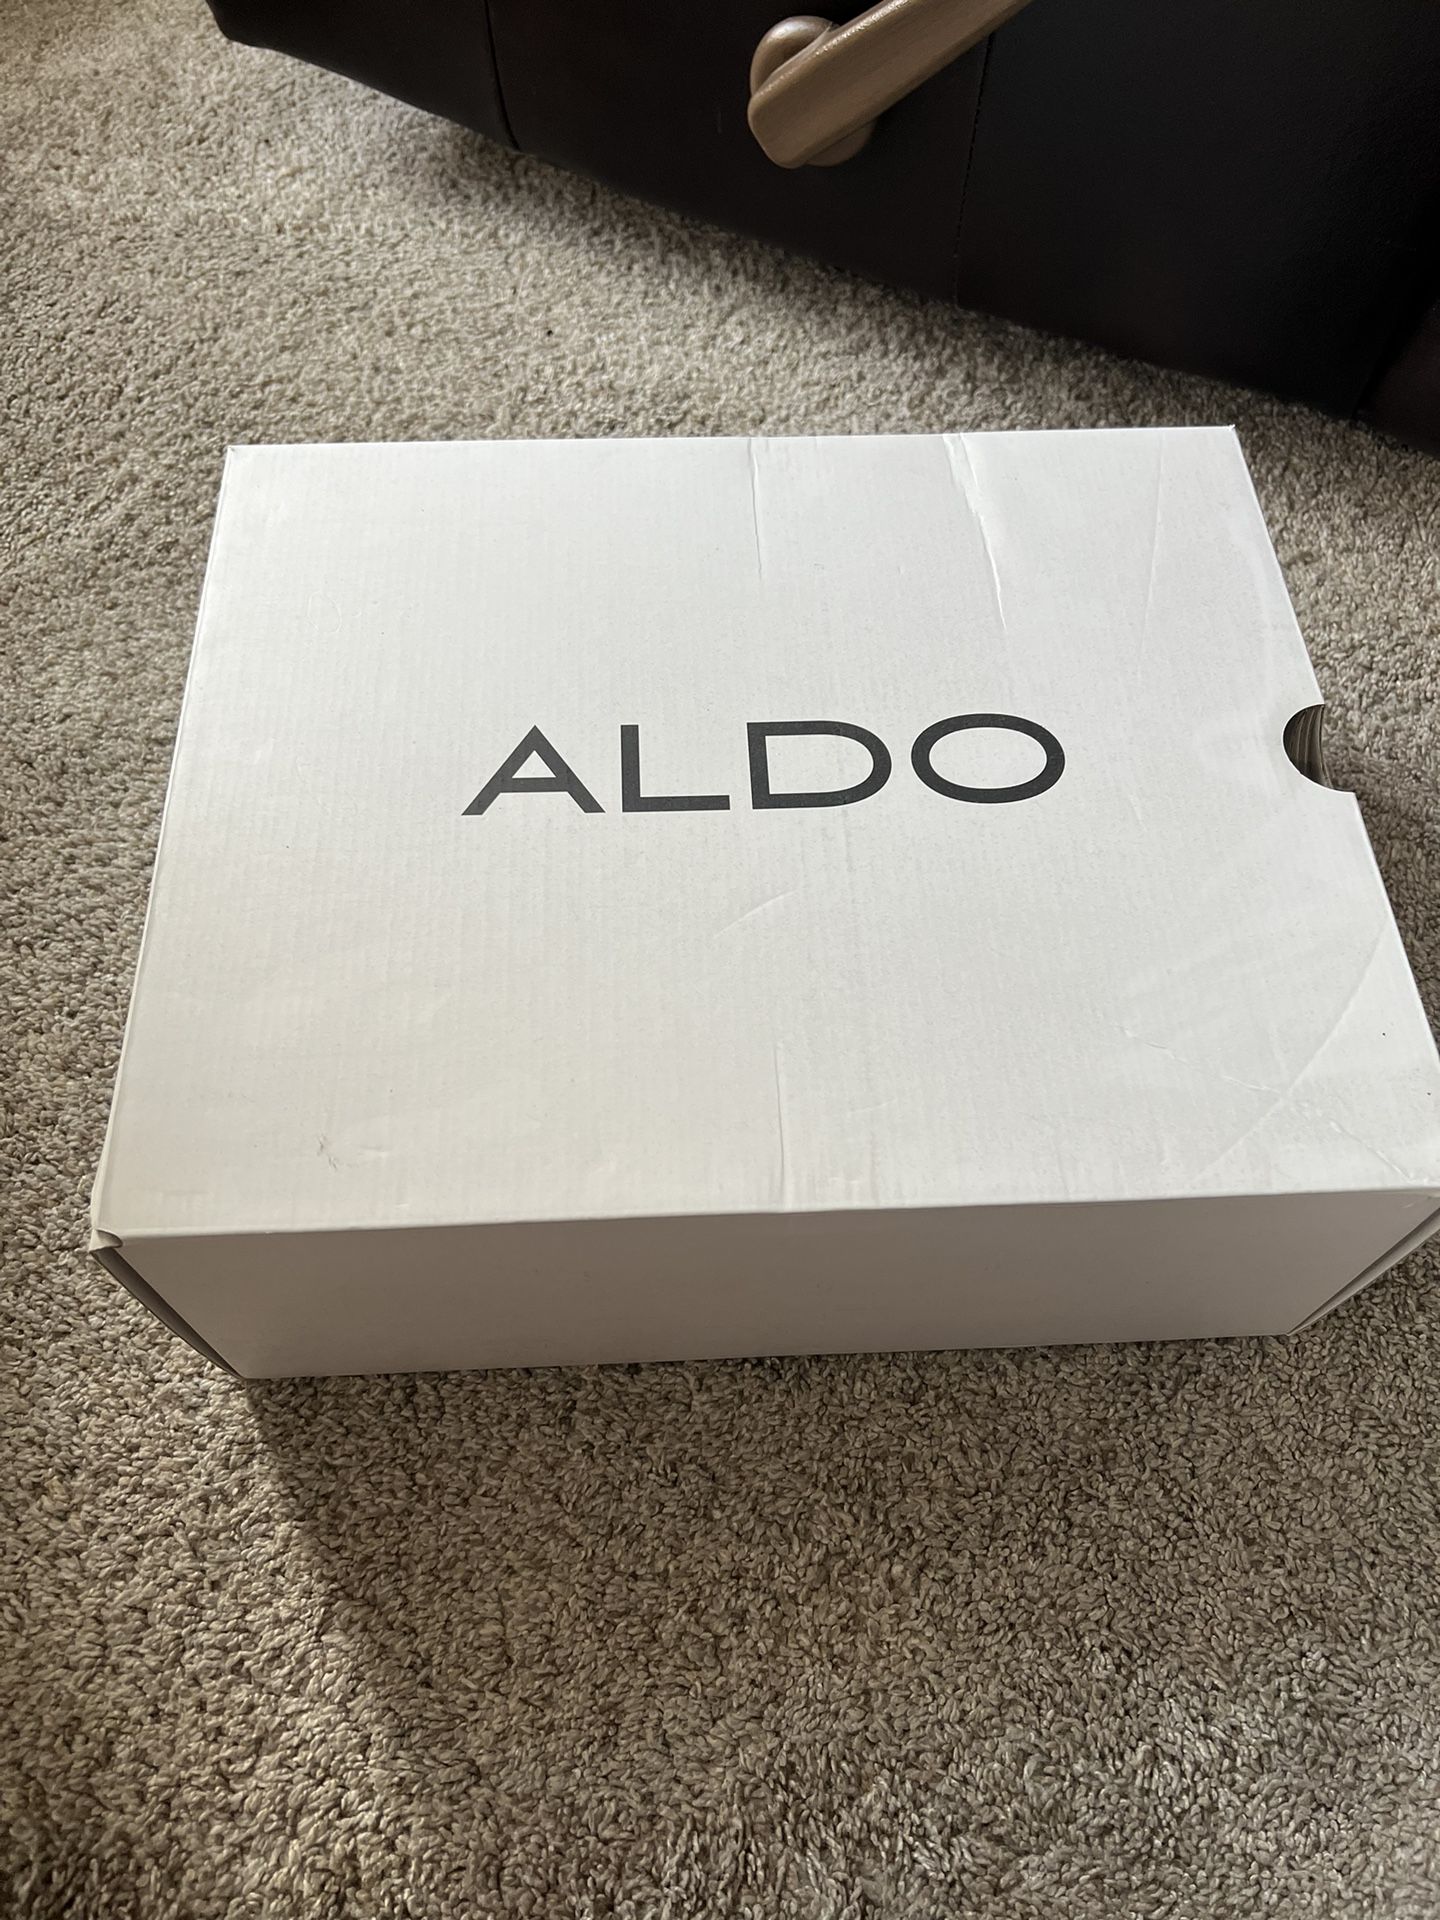 Aldo High Heeled Boots 